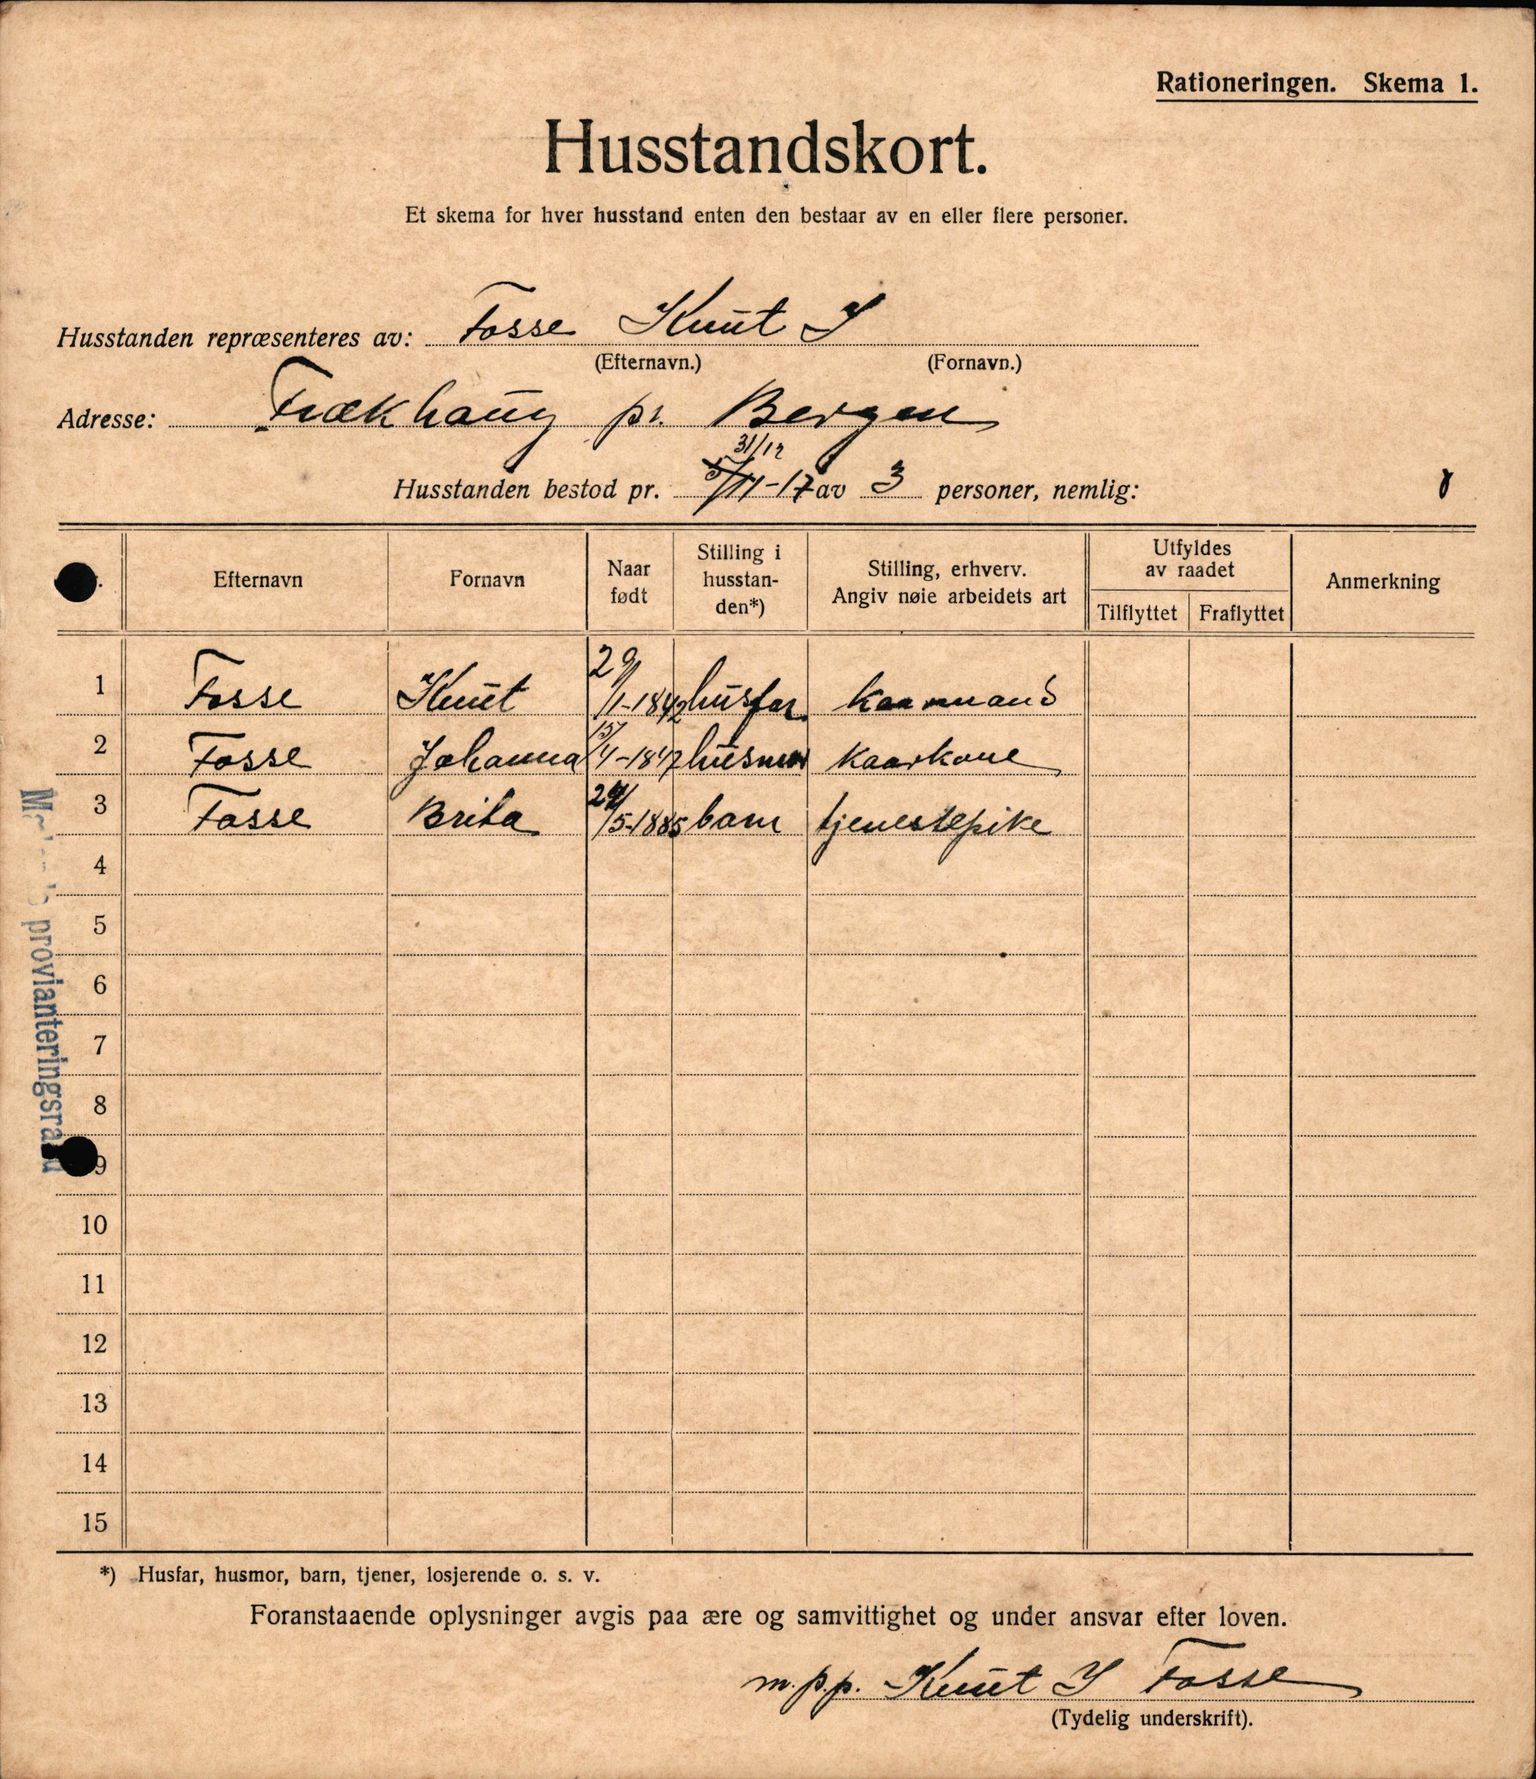 IKAH, Meland kommune, Provianteringsrådet, Husstander per 01.11.1917, 1917-1918, s. 222